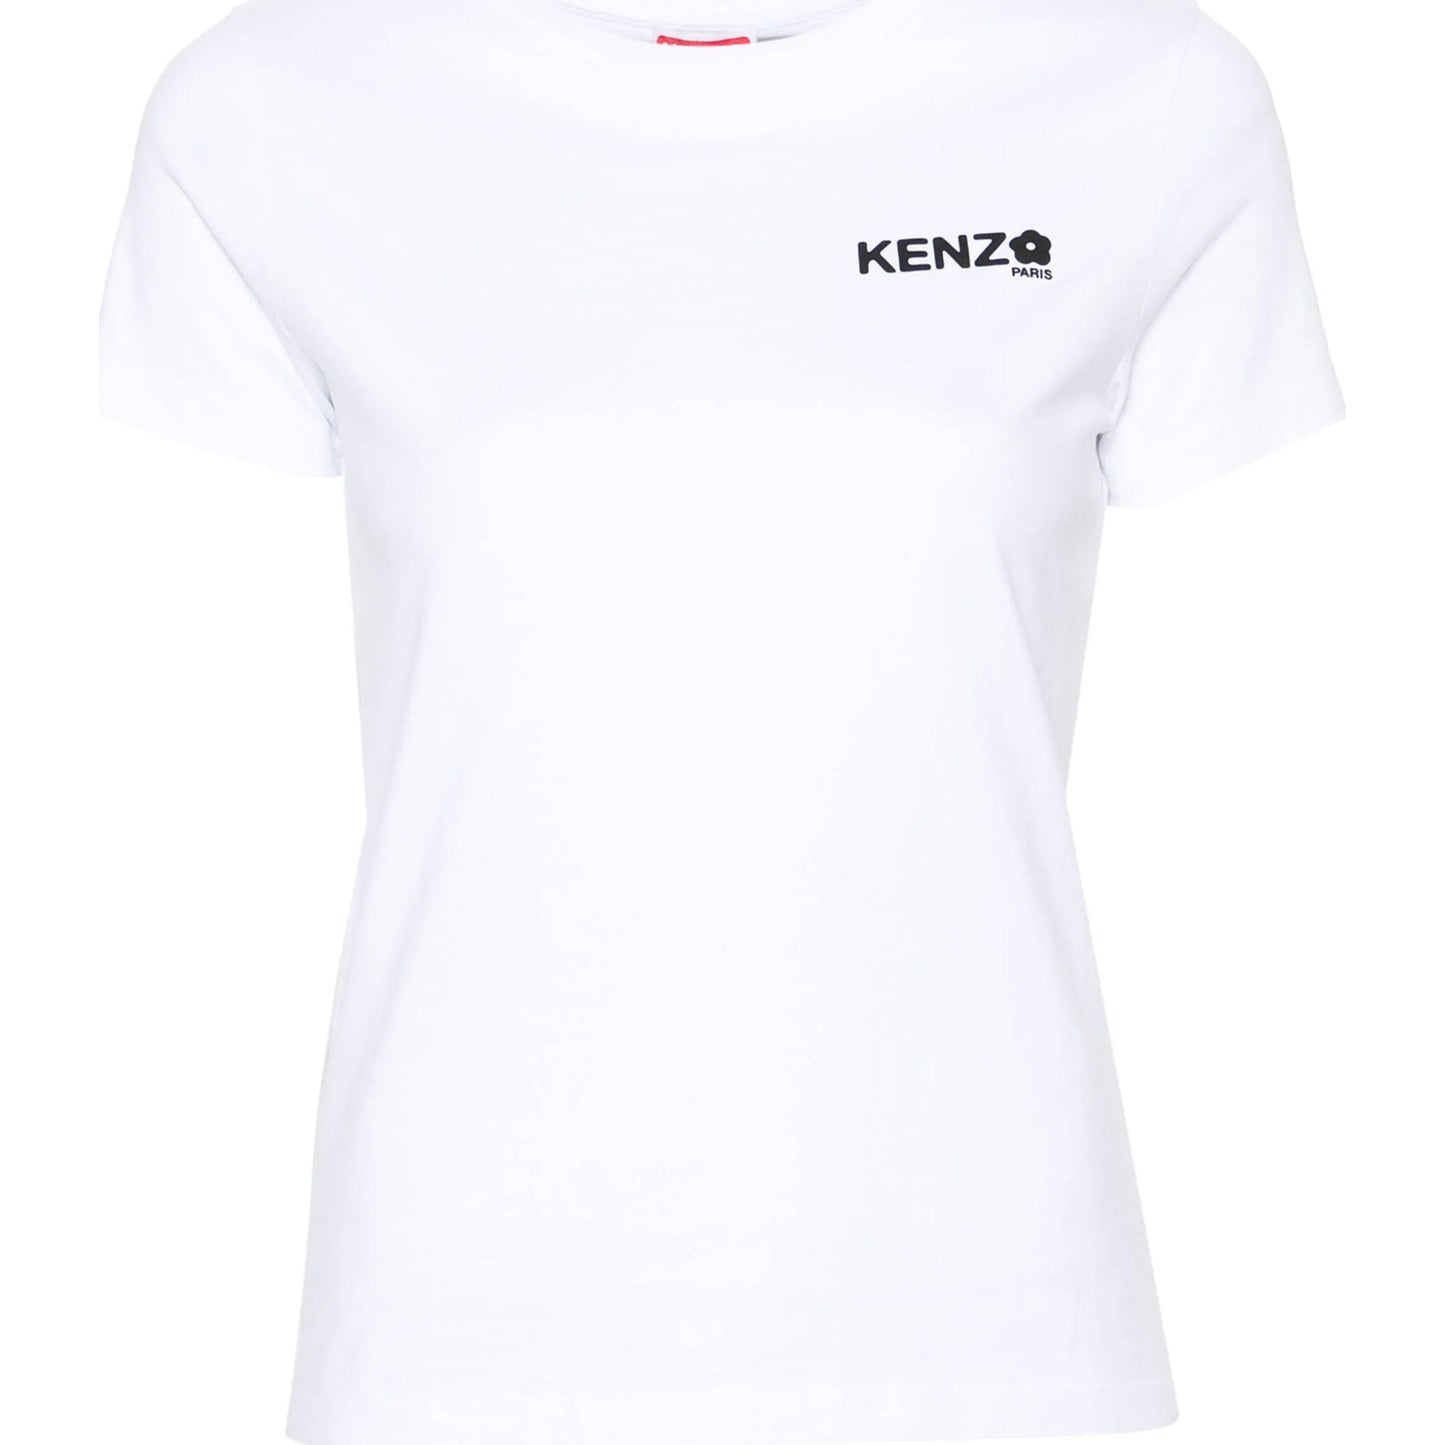 KENZO marškinėliai trumpomis rankovėmis moterims, Balta, Boke 2.0 classic t-shiirt